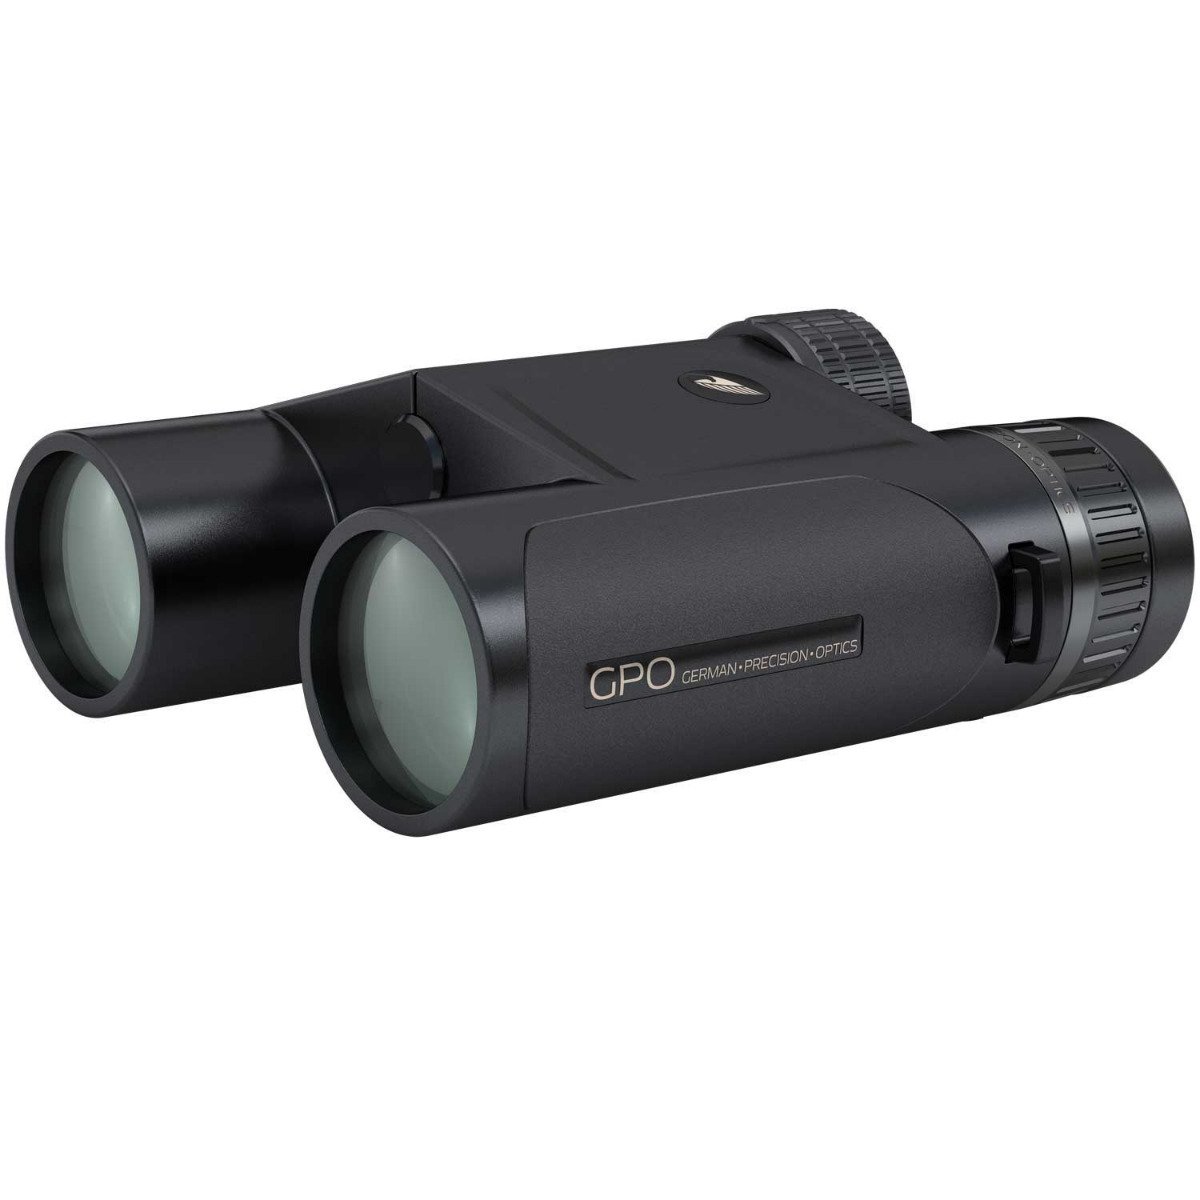 GPO RangeGuide 10X32 HD Binoculars